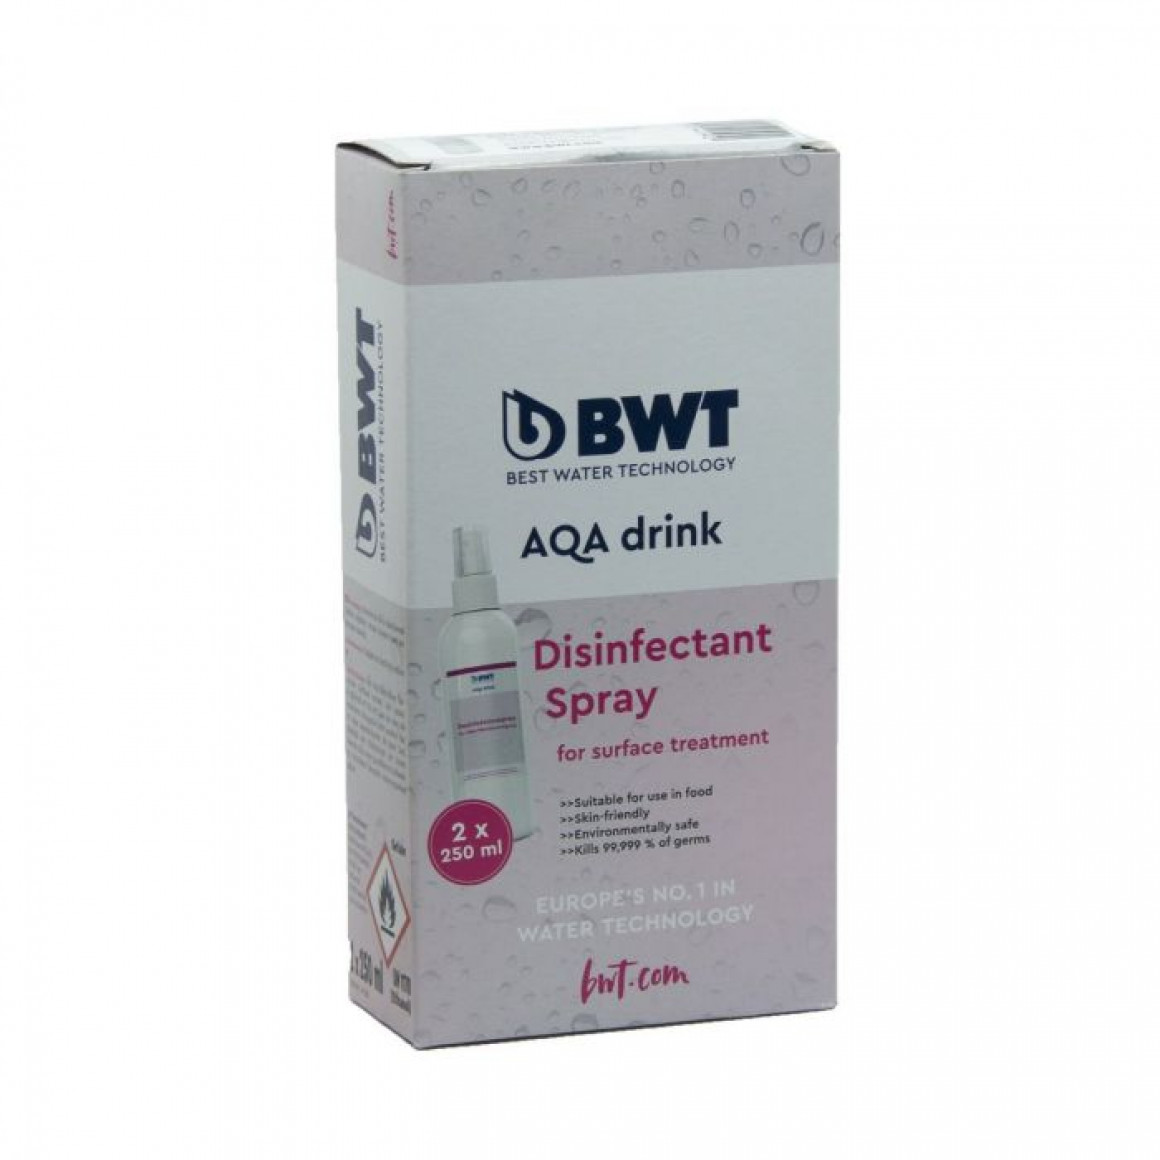 AQA drink disinfectant spray 2x 250ml